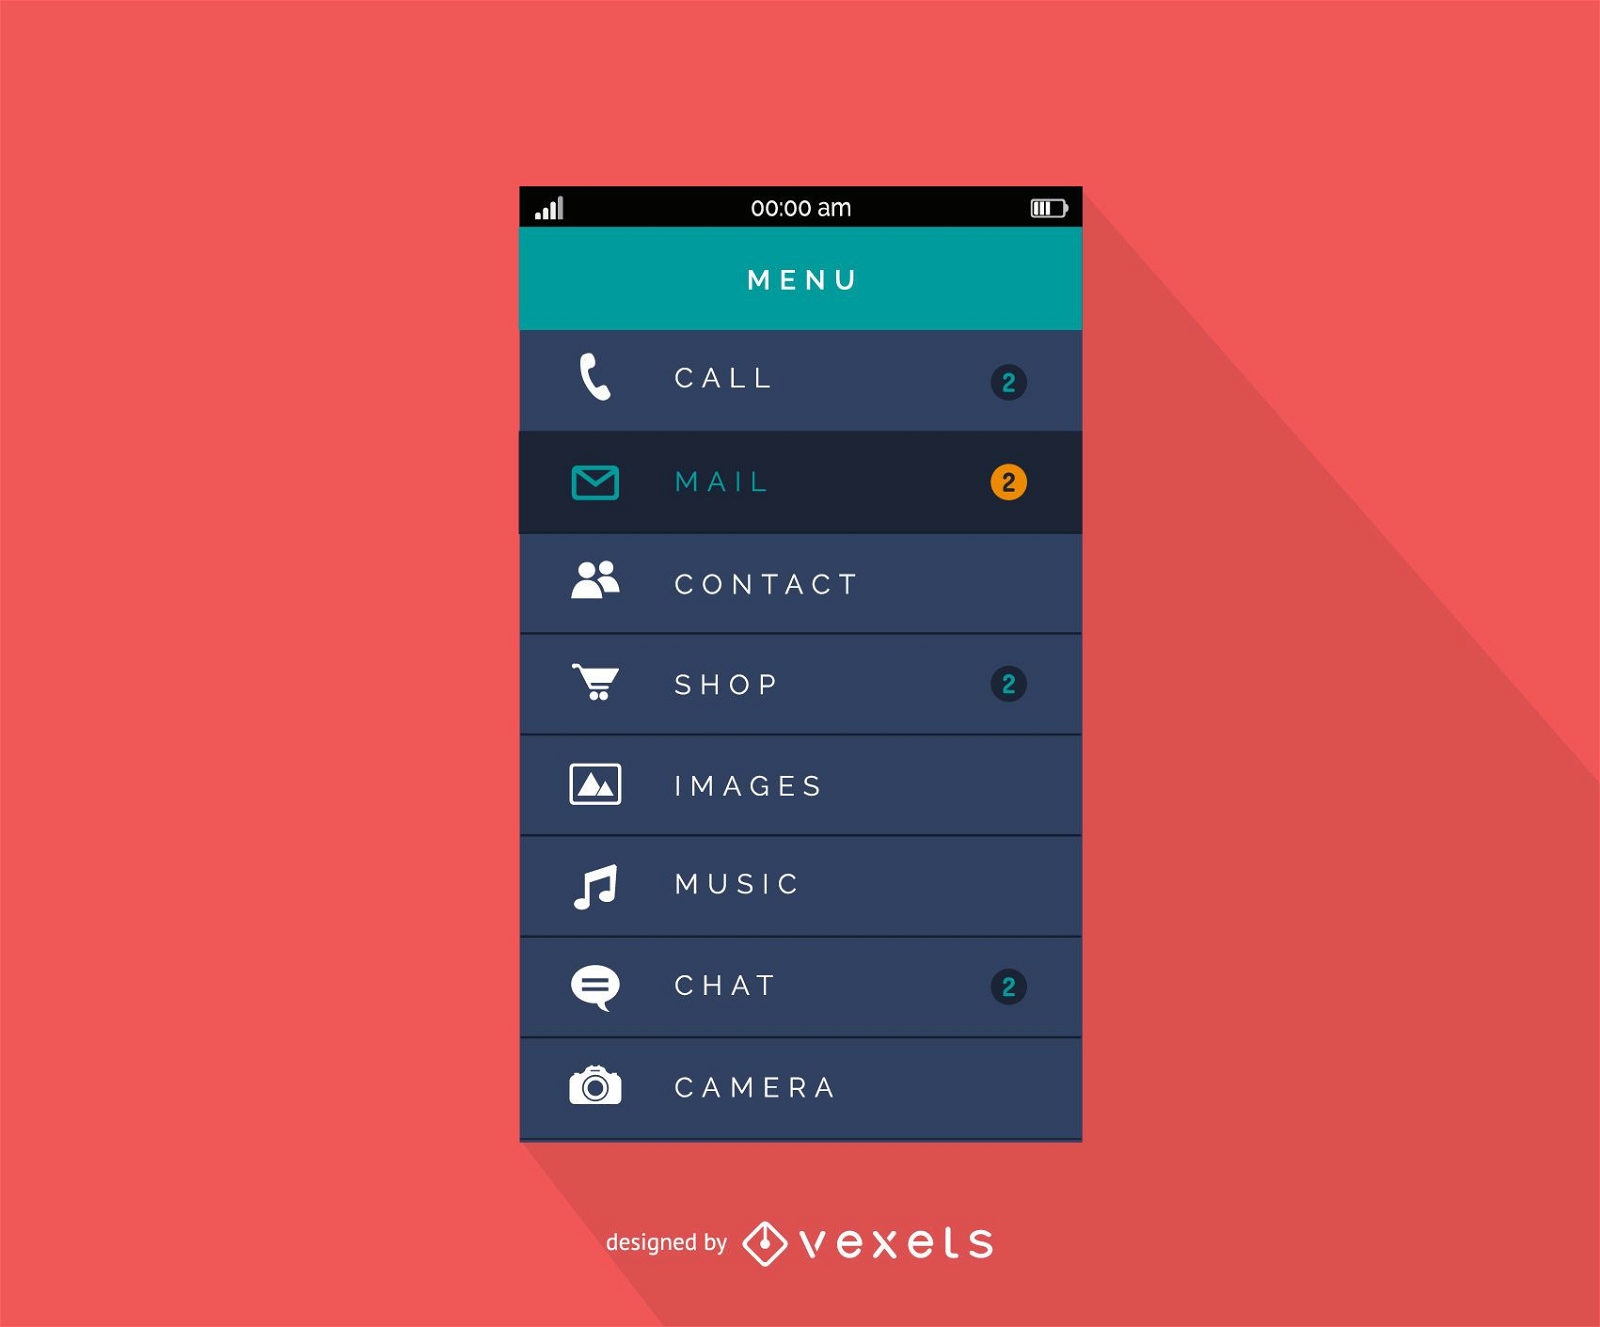 Mobile menu interface design